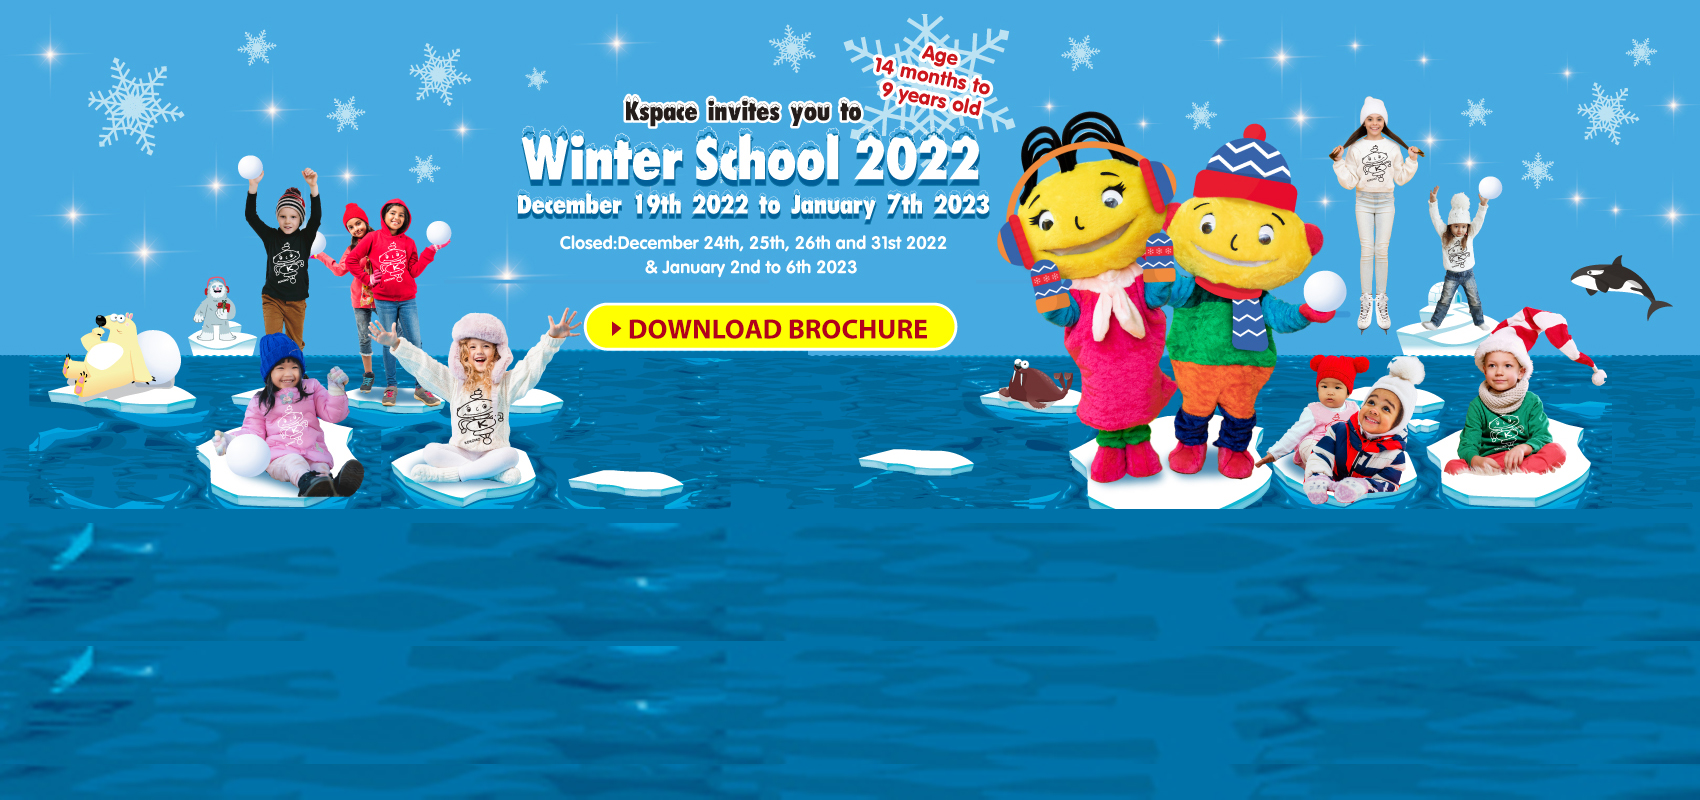 Kspace Winter School 2022